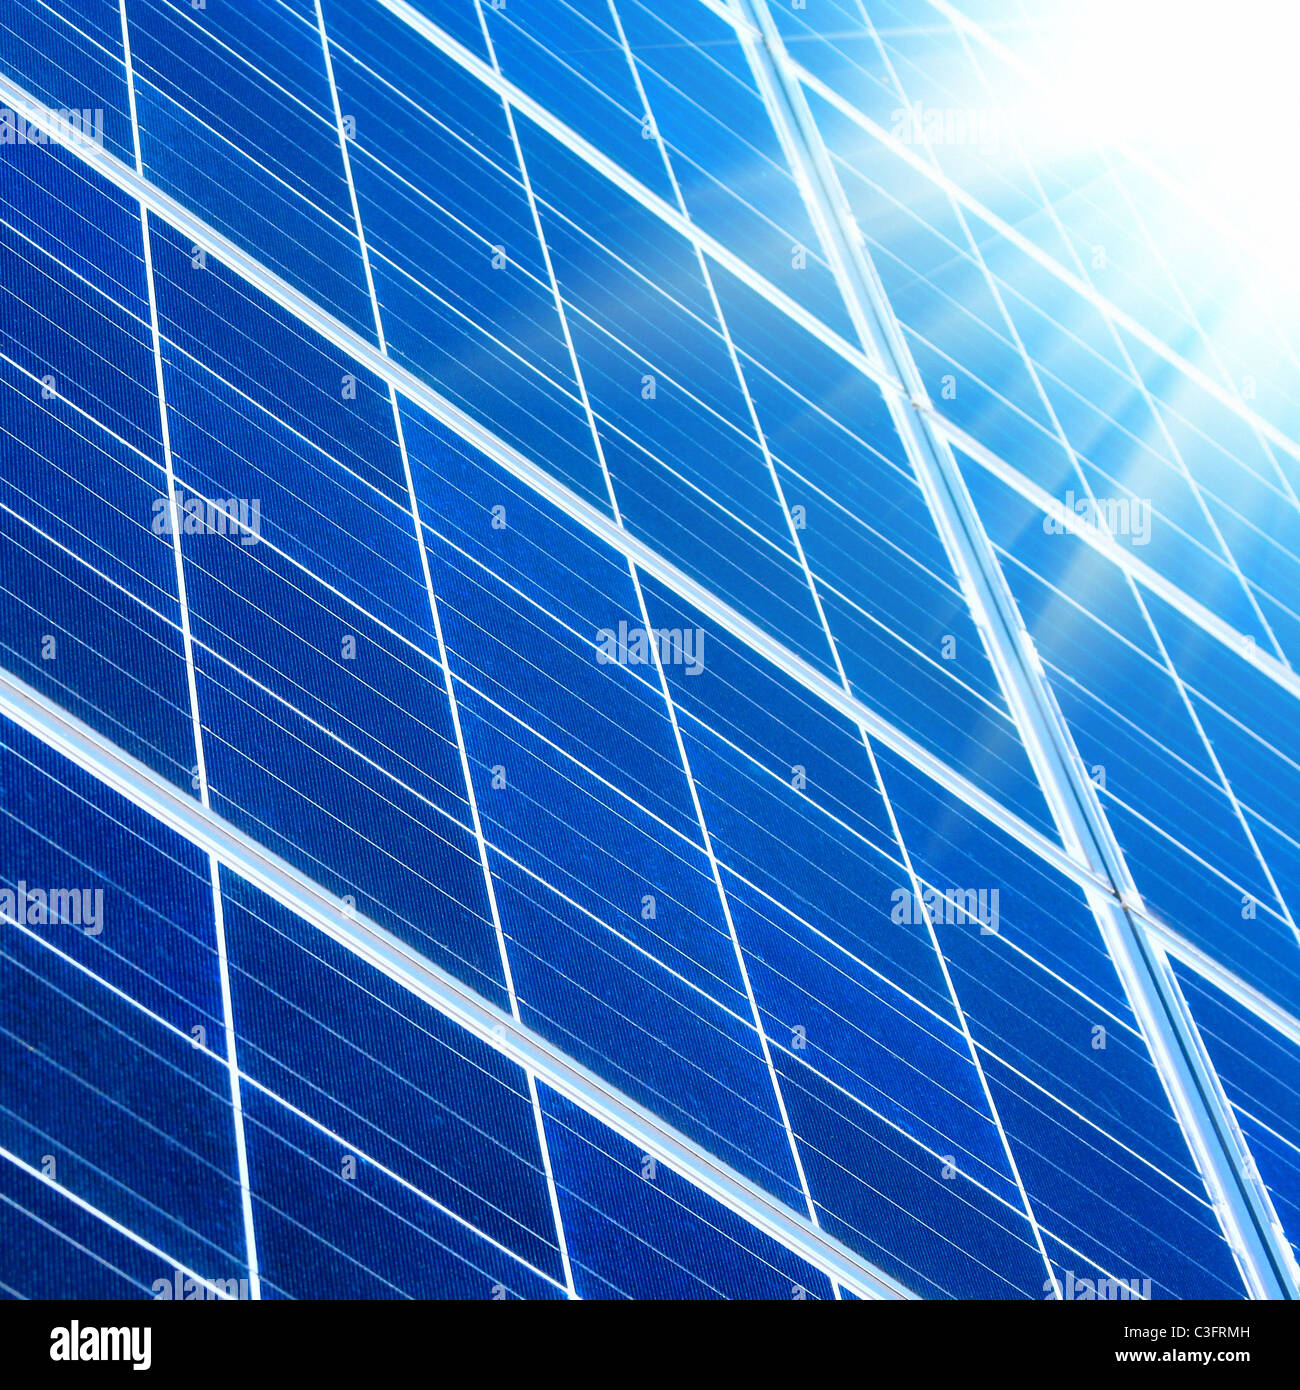 solar panel with sunbeams Stock Photo